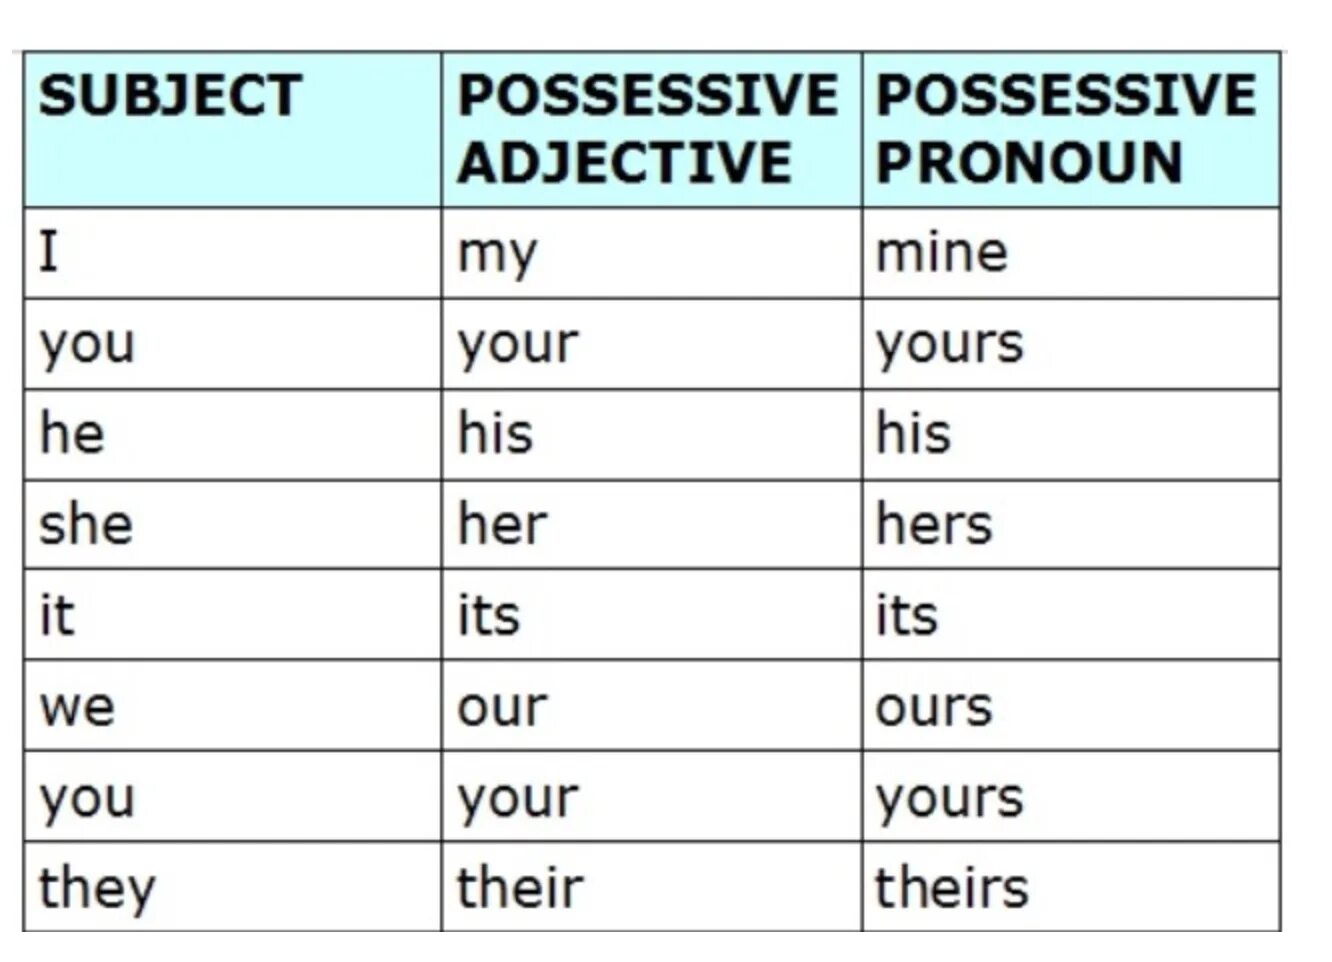 Possessive pronouns правило. Personal and possessive pronouns таблица. Разница между possessive adjectives и possessive pronouns. Притяжательные (possessive pronouns). Игры на английском местоимения